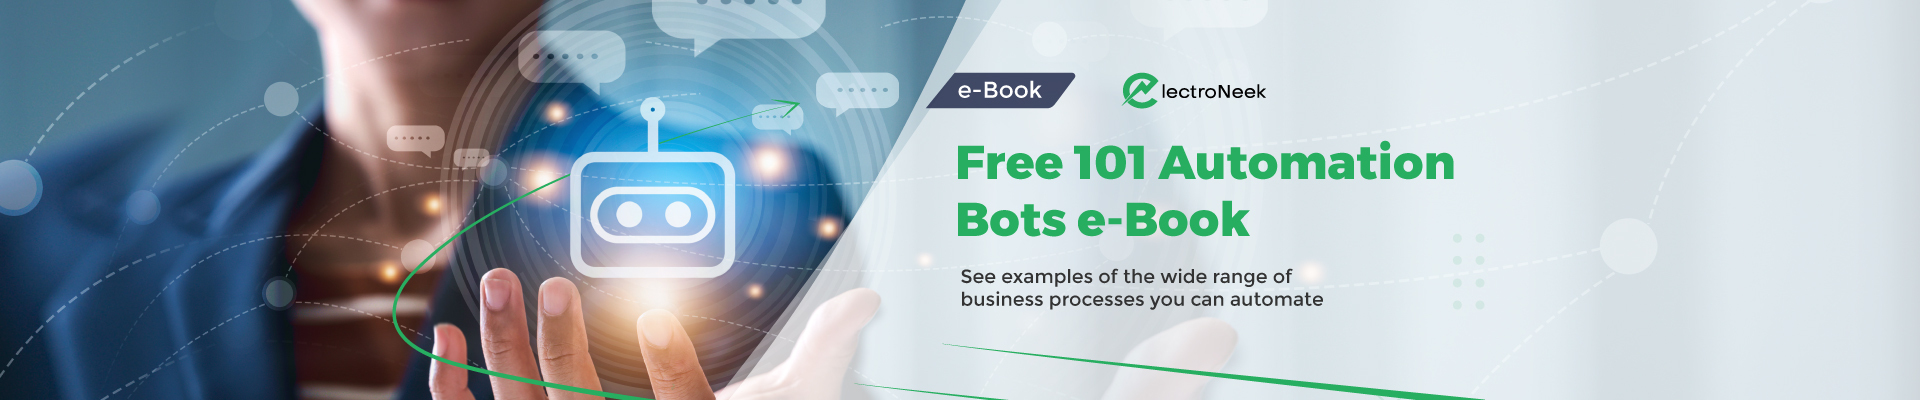 Free-101-automation-bots-e-book-LP-banner-1